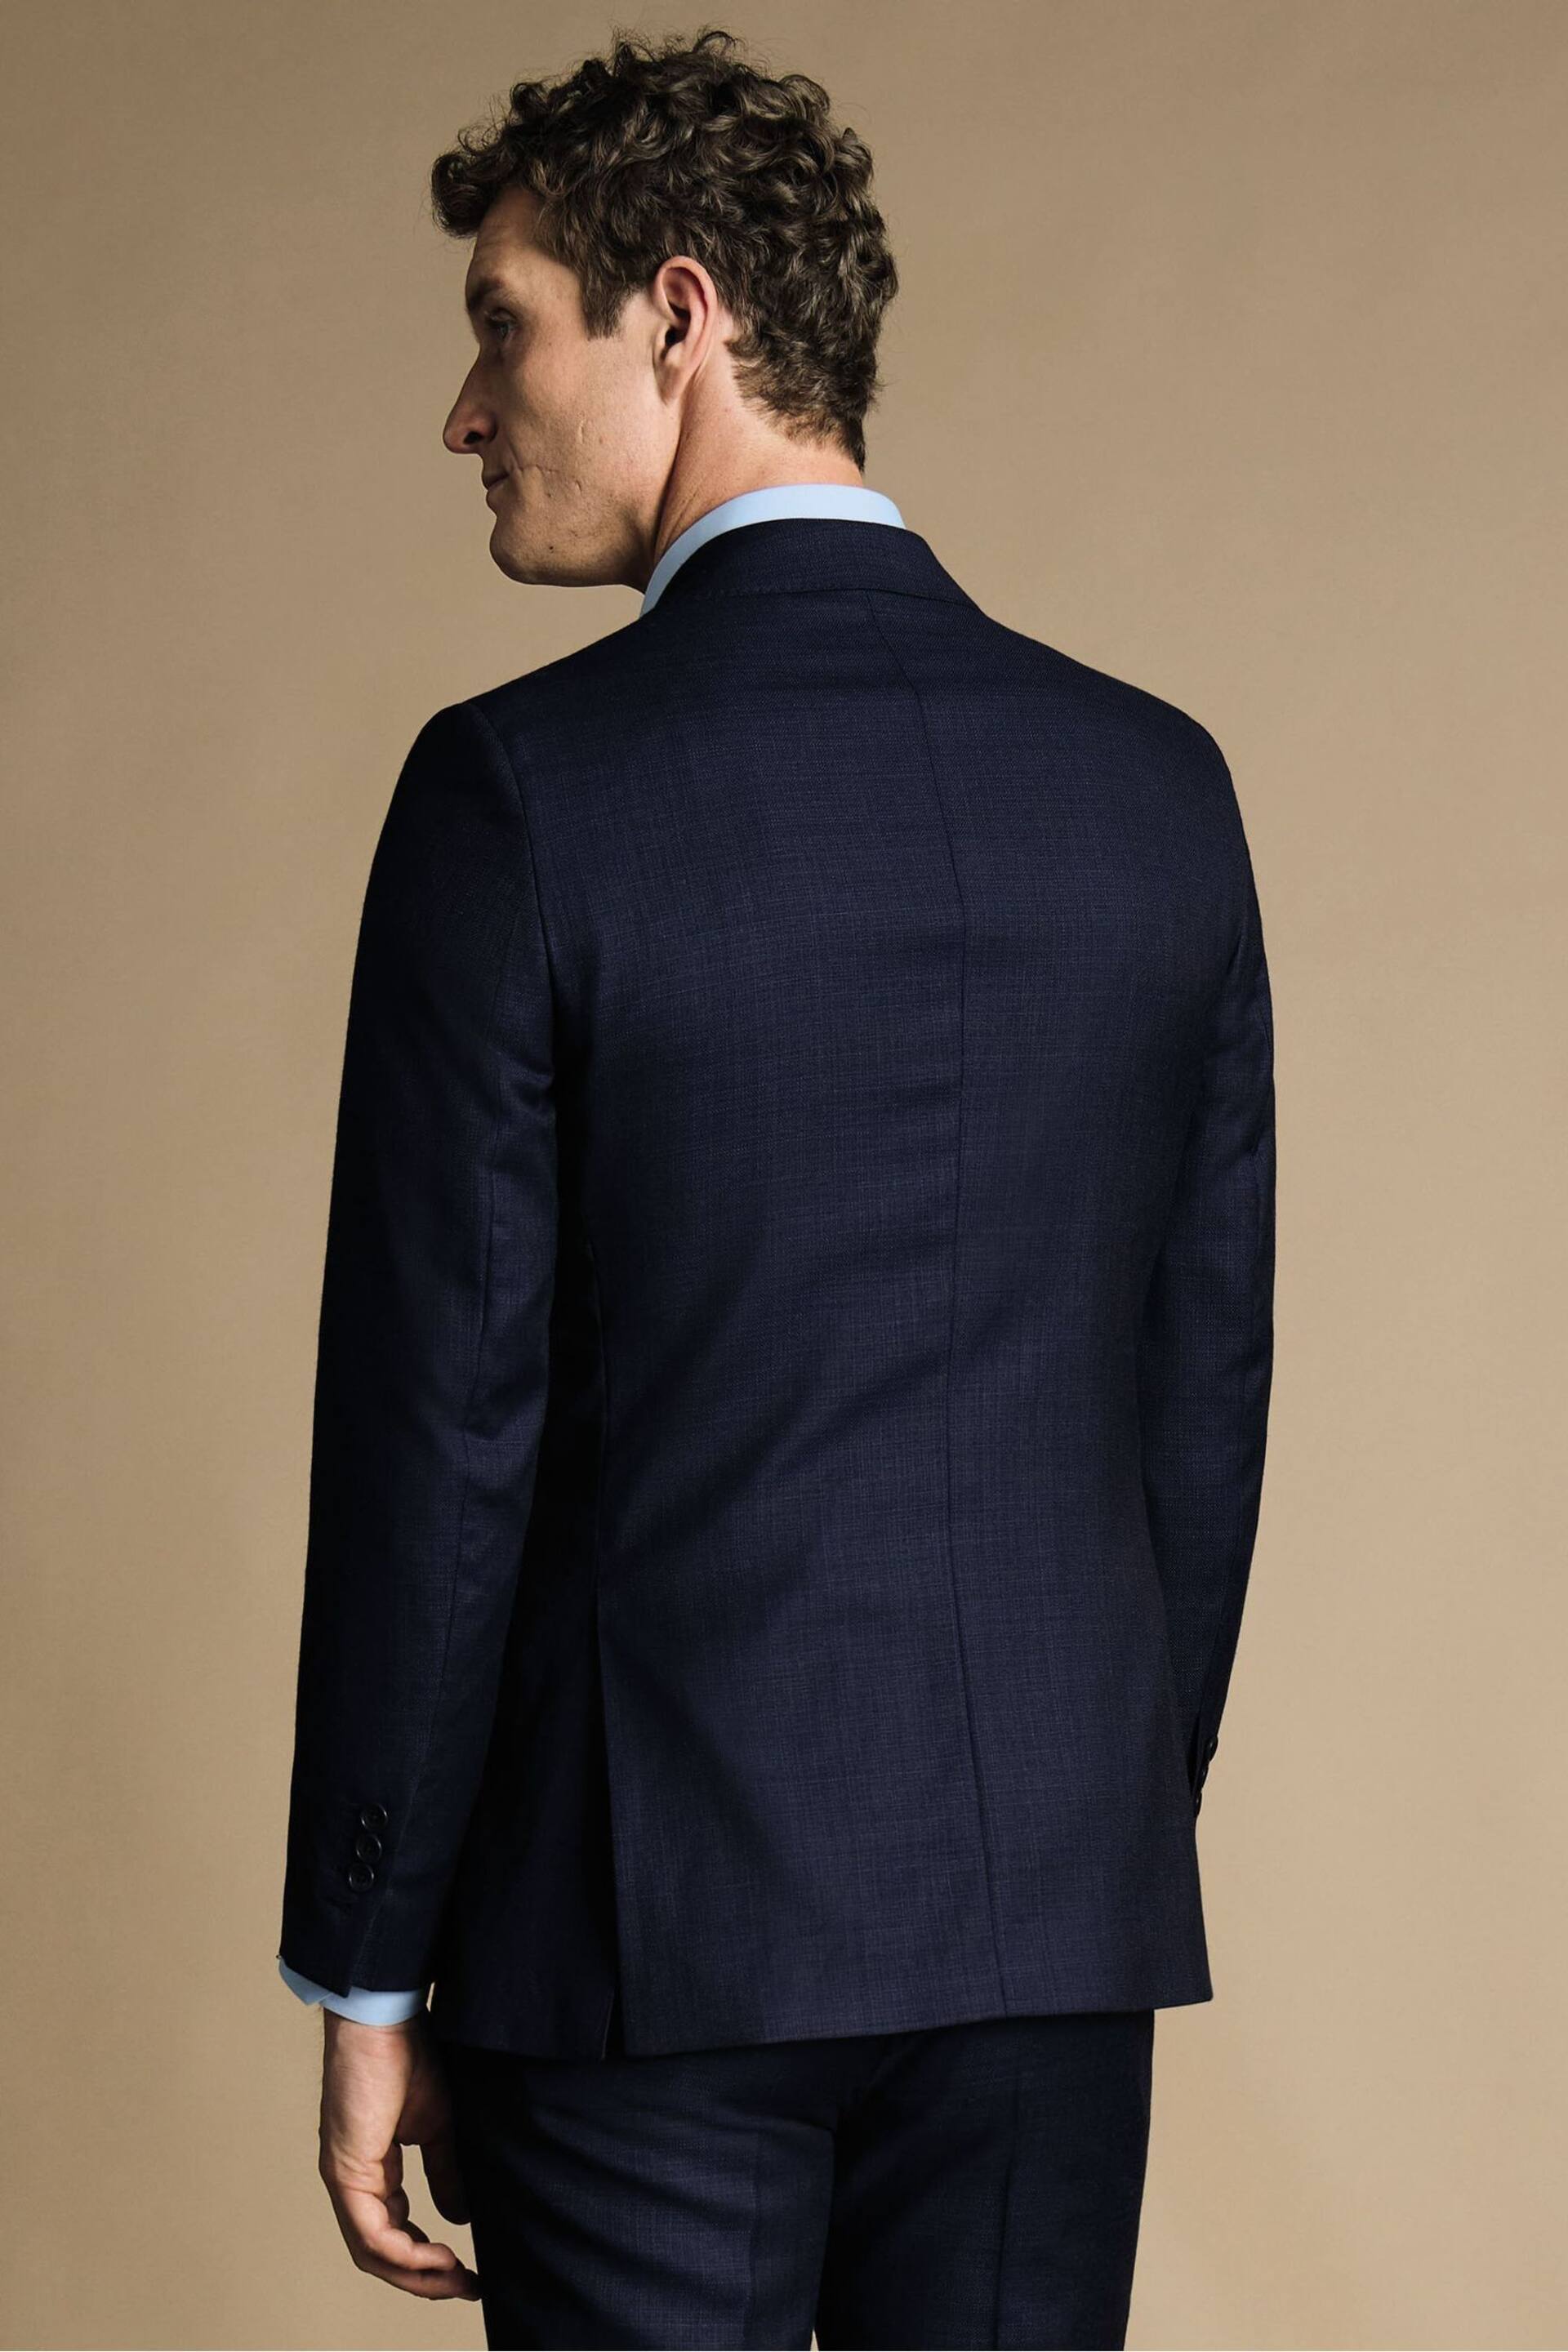 Charles Tyrwhitt Navy Blue Slim Fit Italian Luxury Suit: Jacket - Image 2 of 5